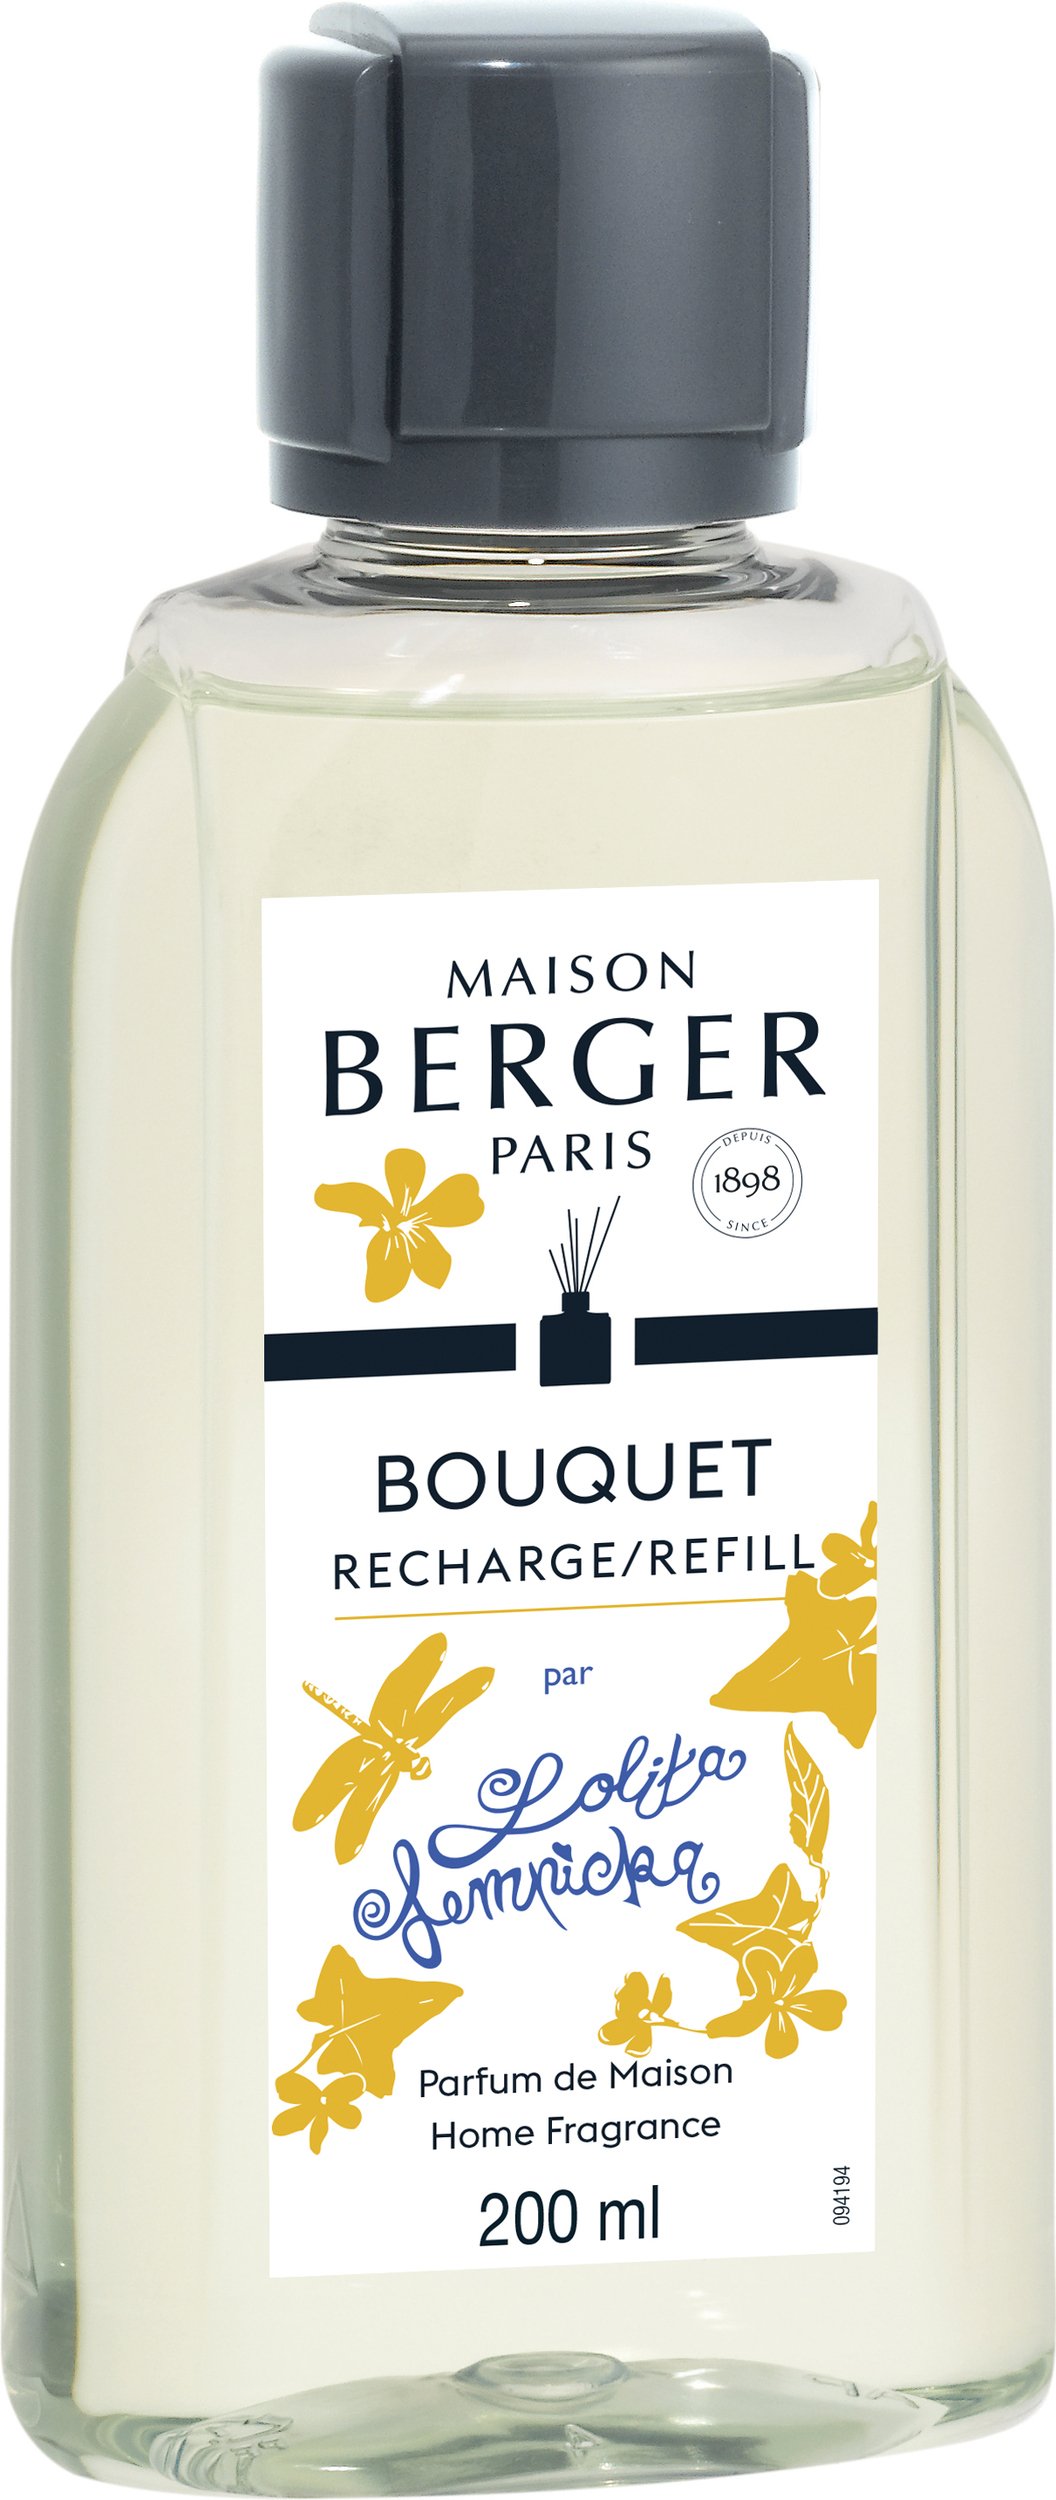 Lolita Diffuser fragrance 200 ml - Maison Berger Paris 6237